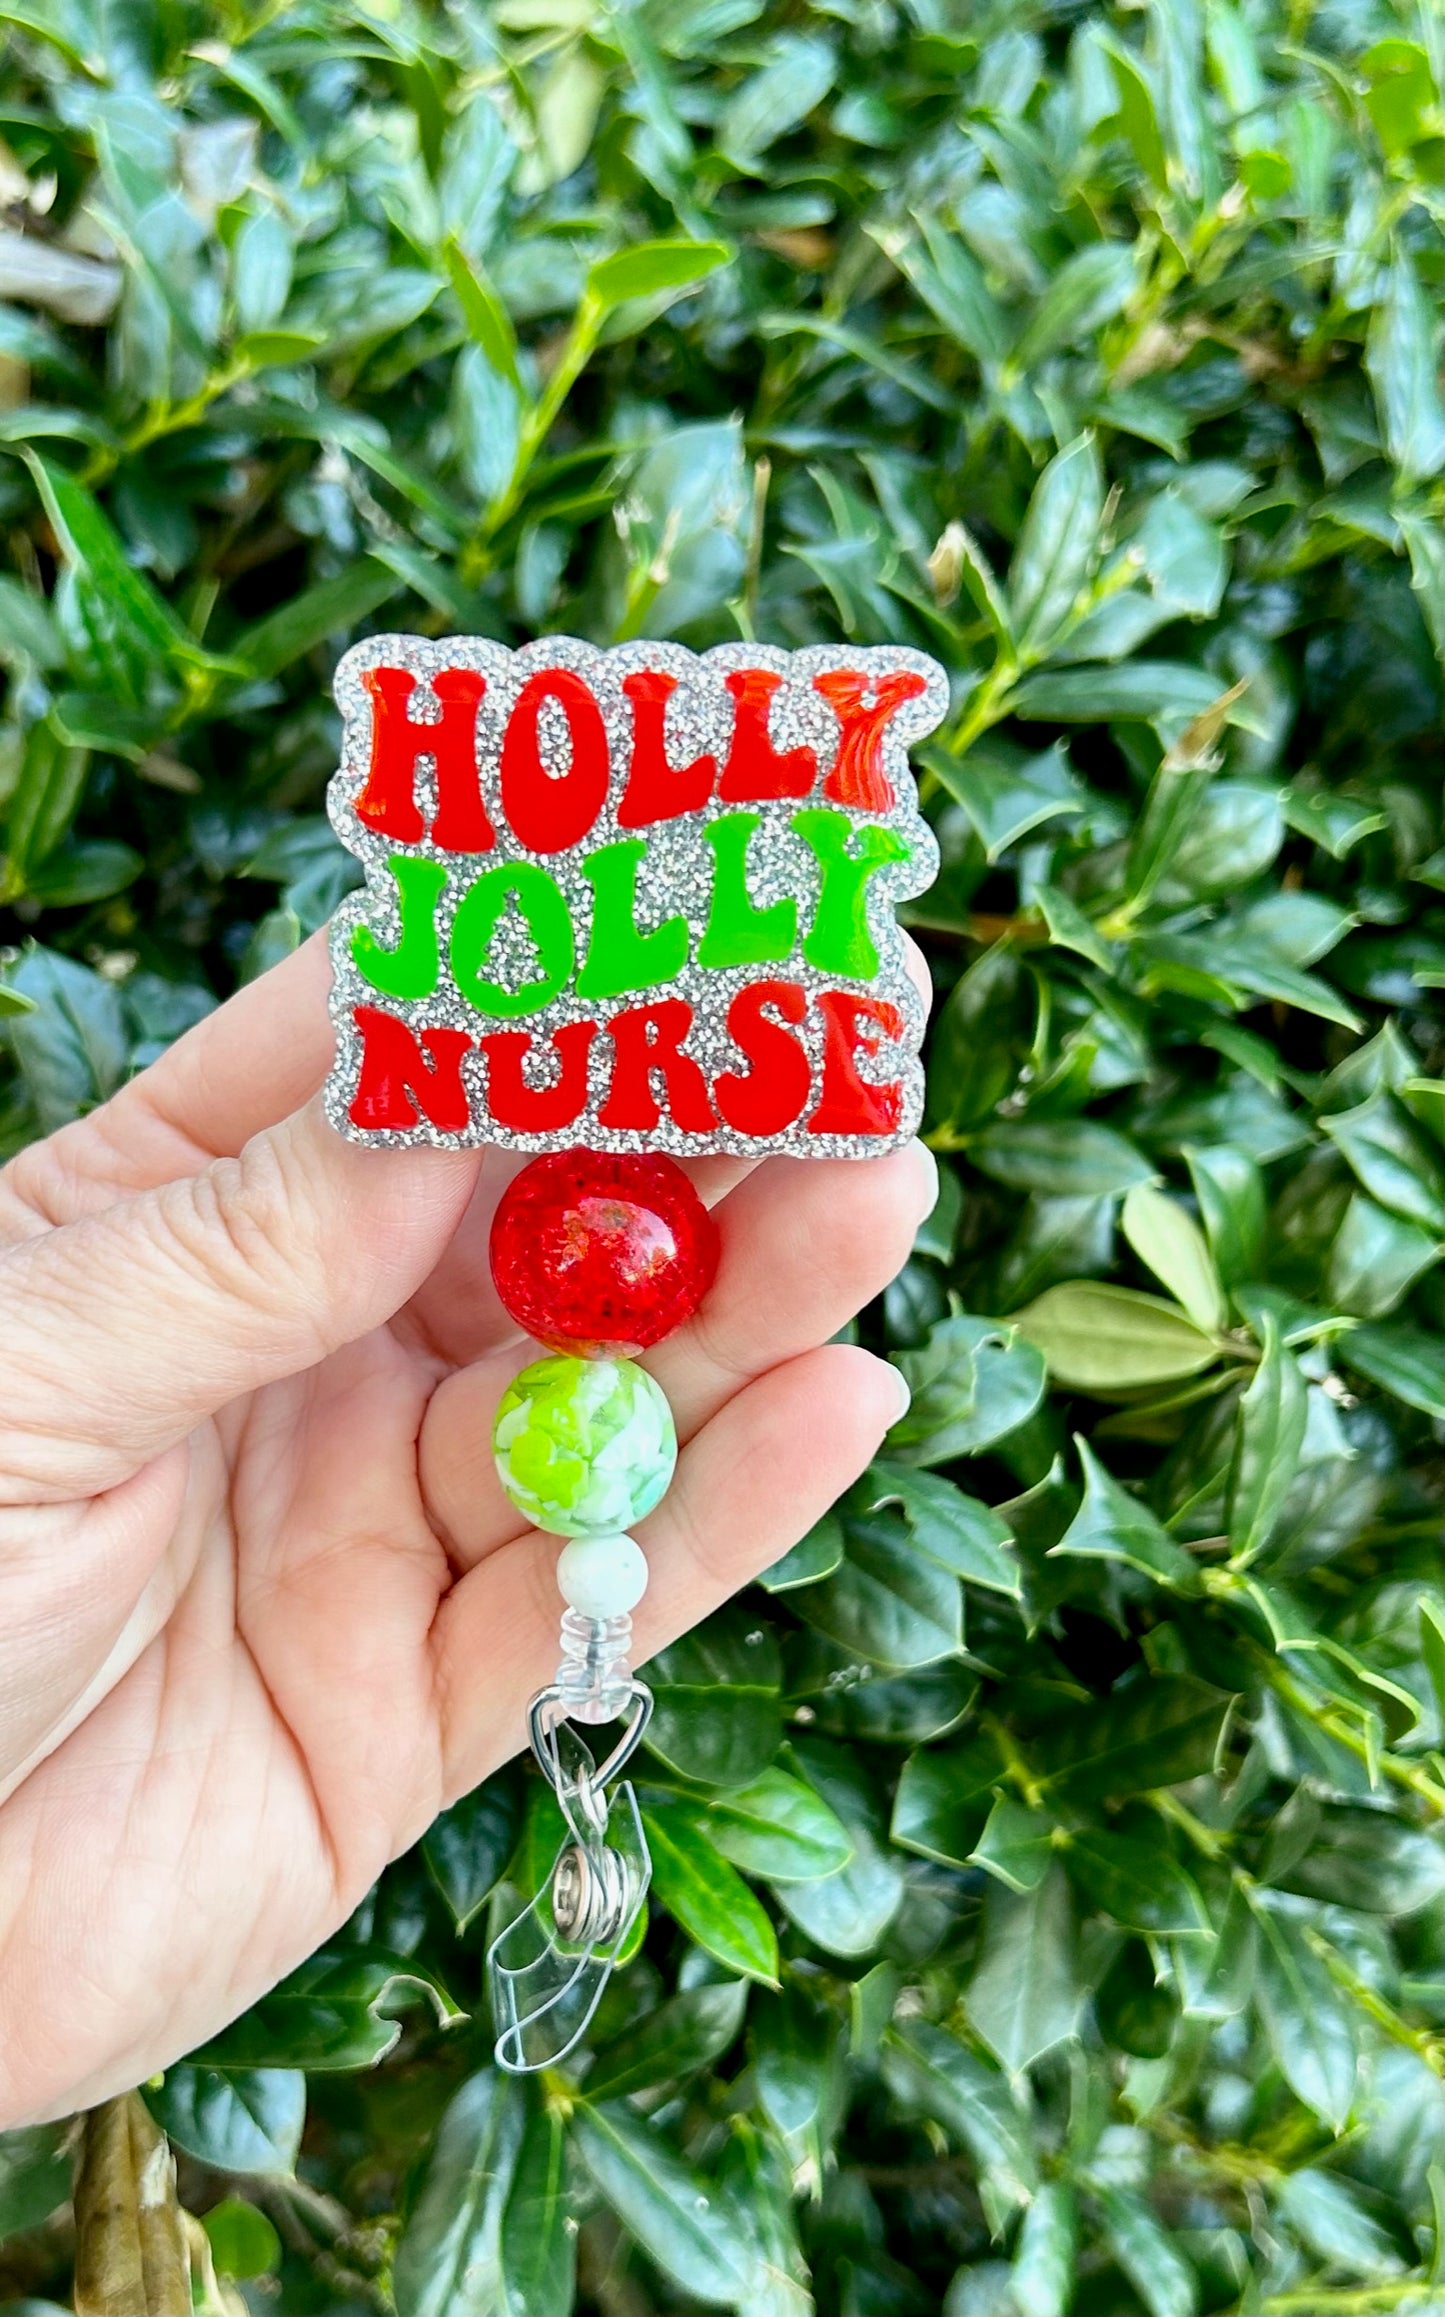 Holly Jolly Nurse Badge Reel